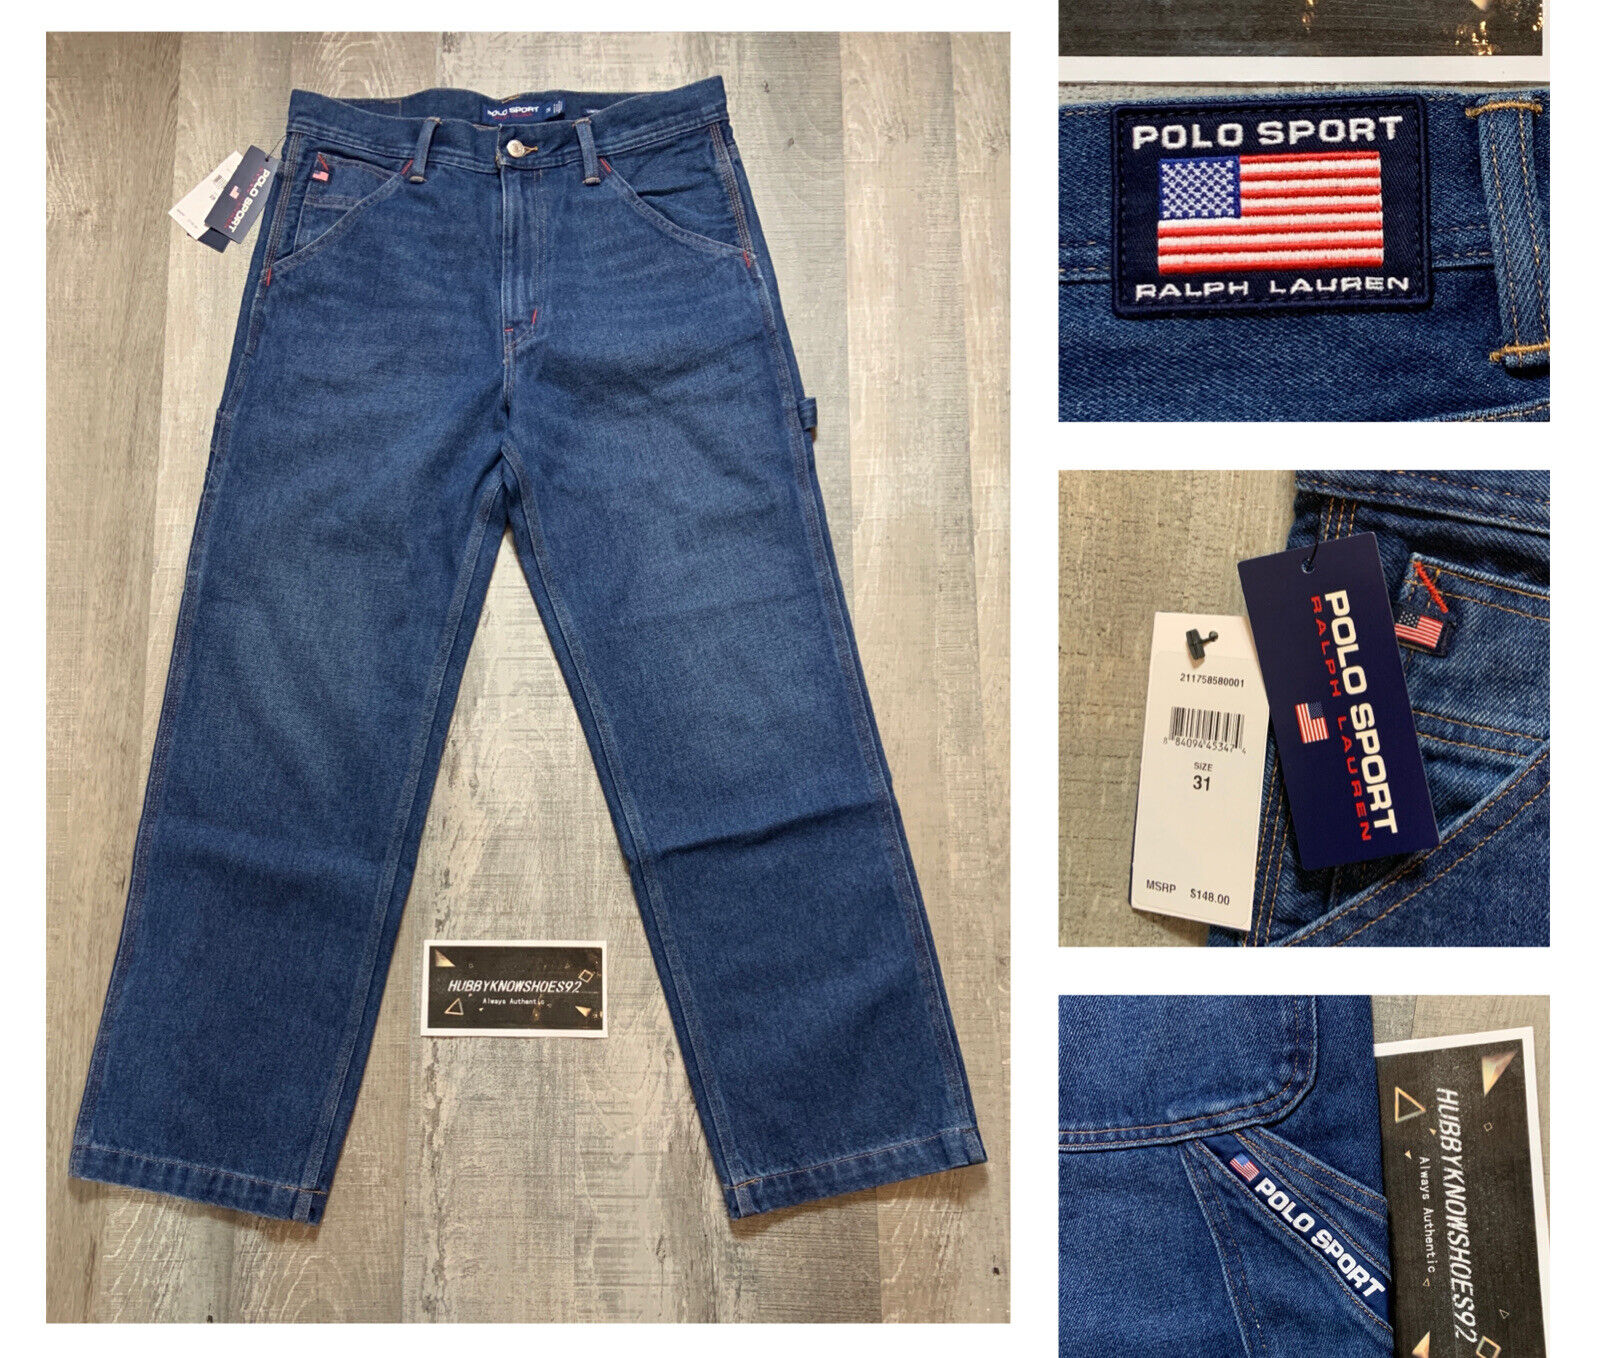 Polo Sport Ralph Lauren Limited Edition Jeans Wide Leg Mid Rise Women’s Sz  31 29